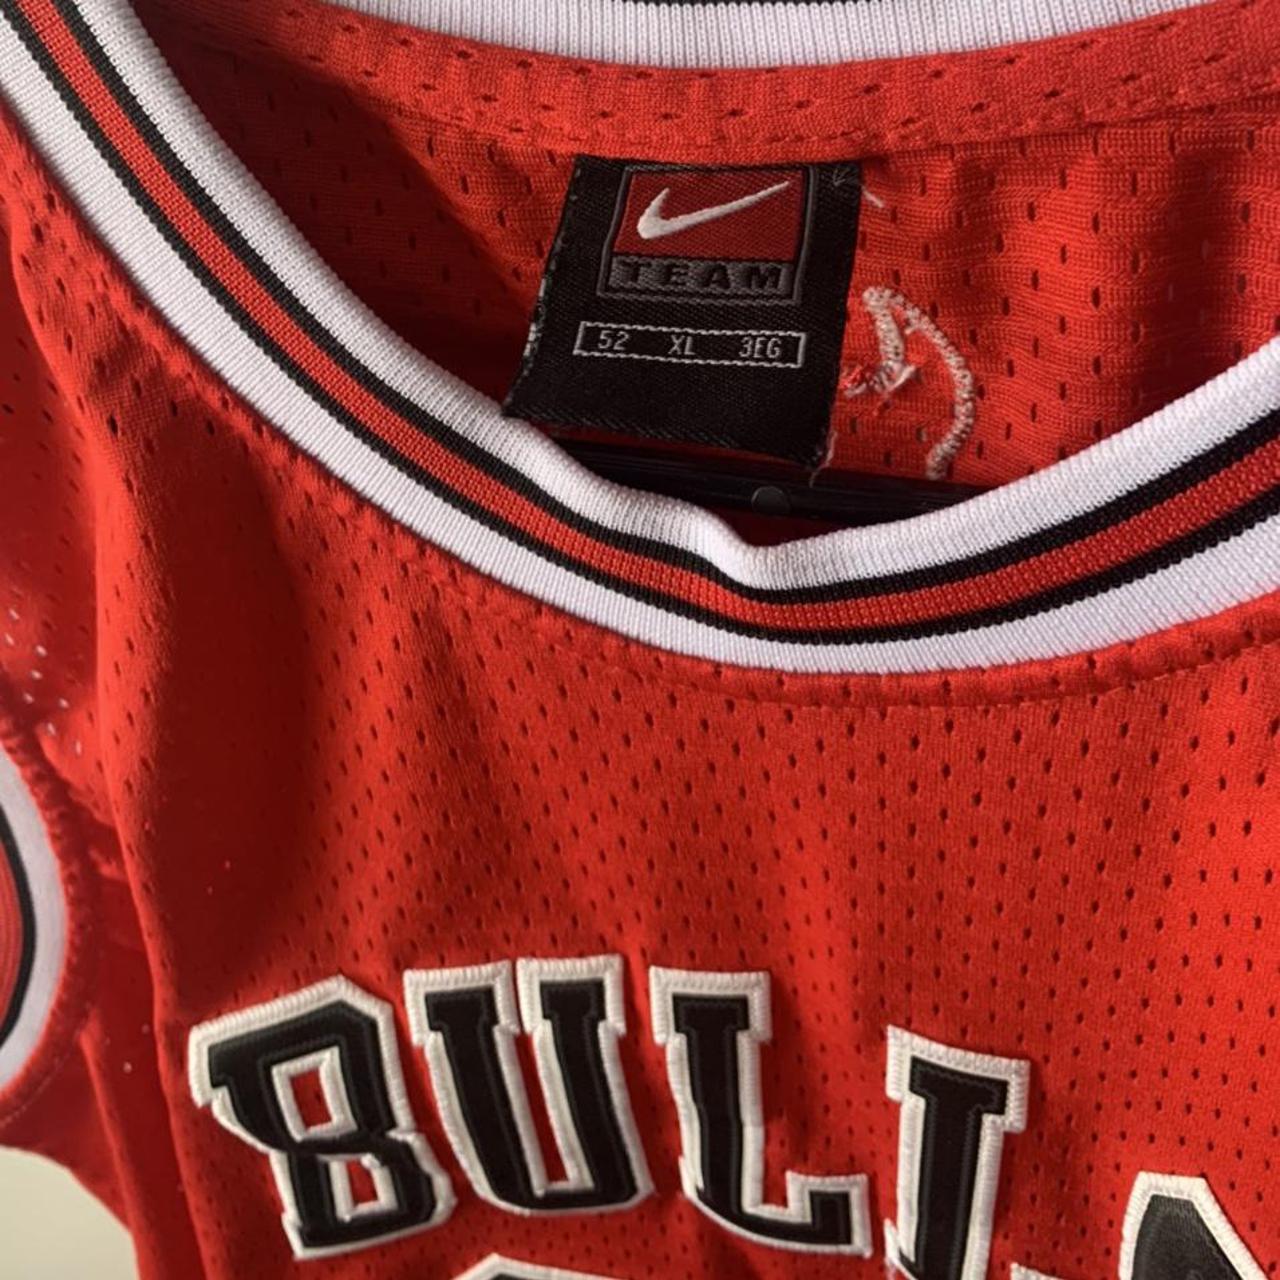 Team nike Chicago bulls michael Jordan jersey size - Depop